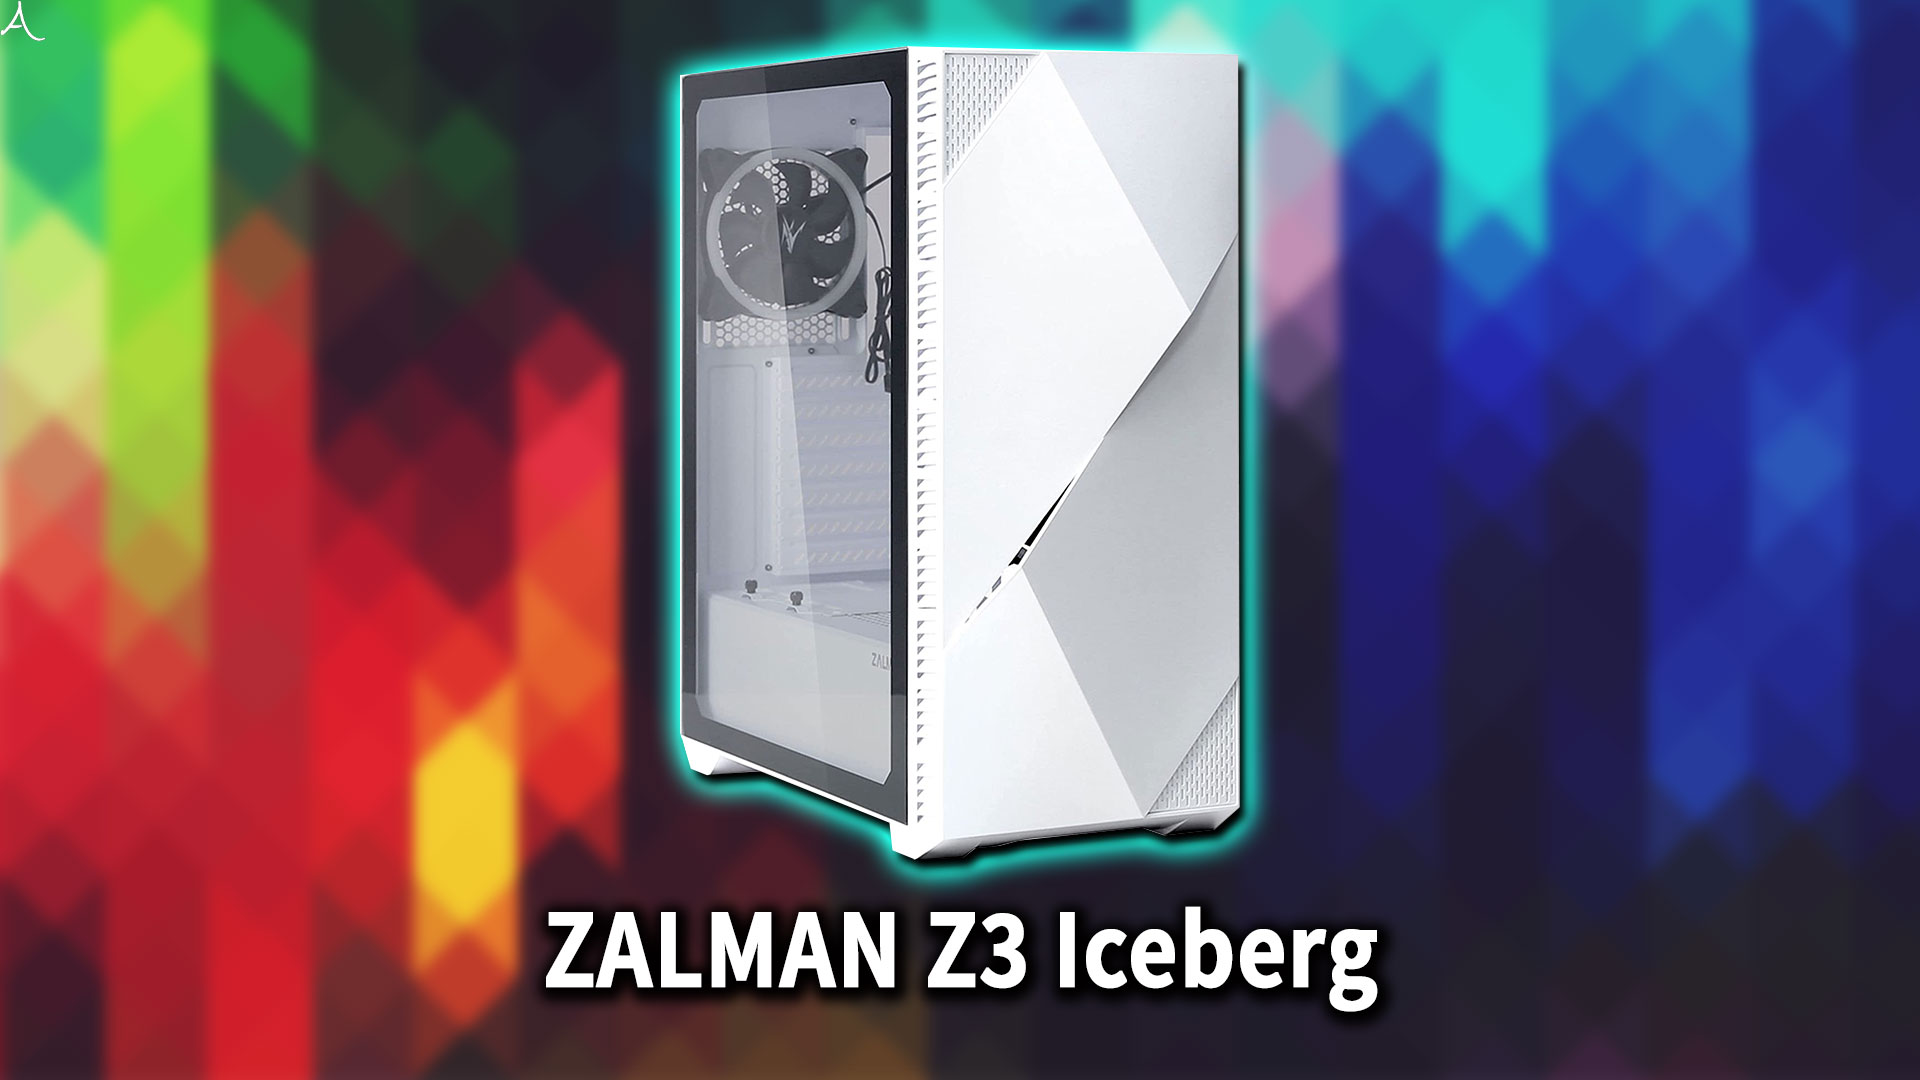 ｢ZALMAN Z3 Iceberg｣のサイズ・大きさはどれくらい？